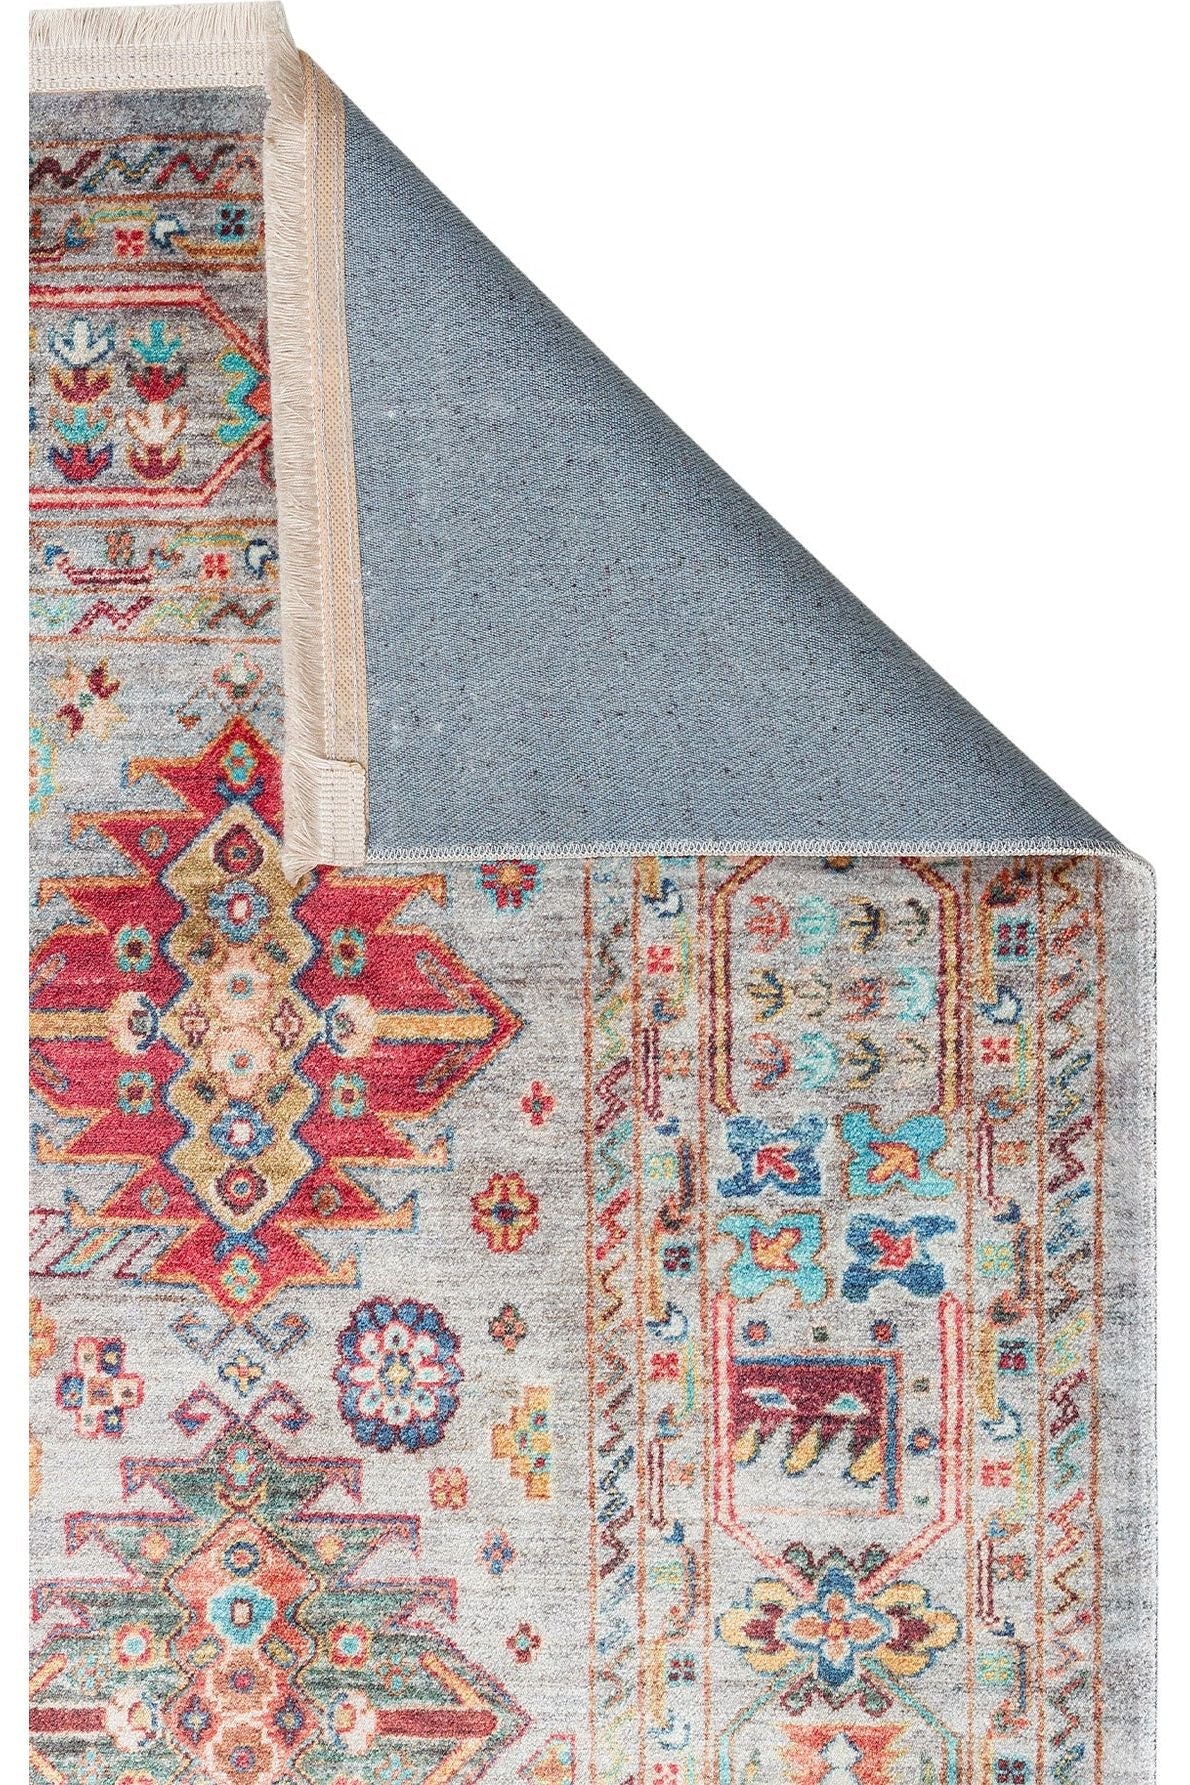 #Turkish_Carpets_Rugs# #Modern_Carpets# #Abrash_Carpets#User-Friendly Washable Anti-Slippery Made Carpets With Antique DesignsAtk 06 Aqua